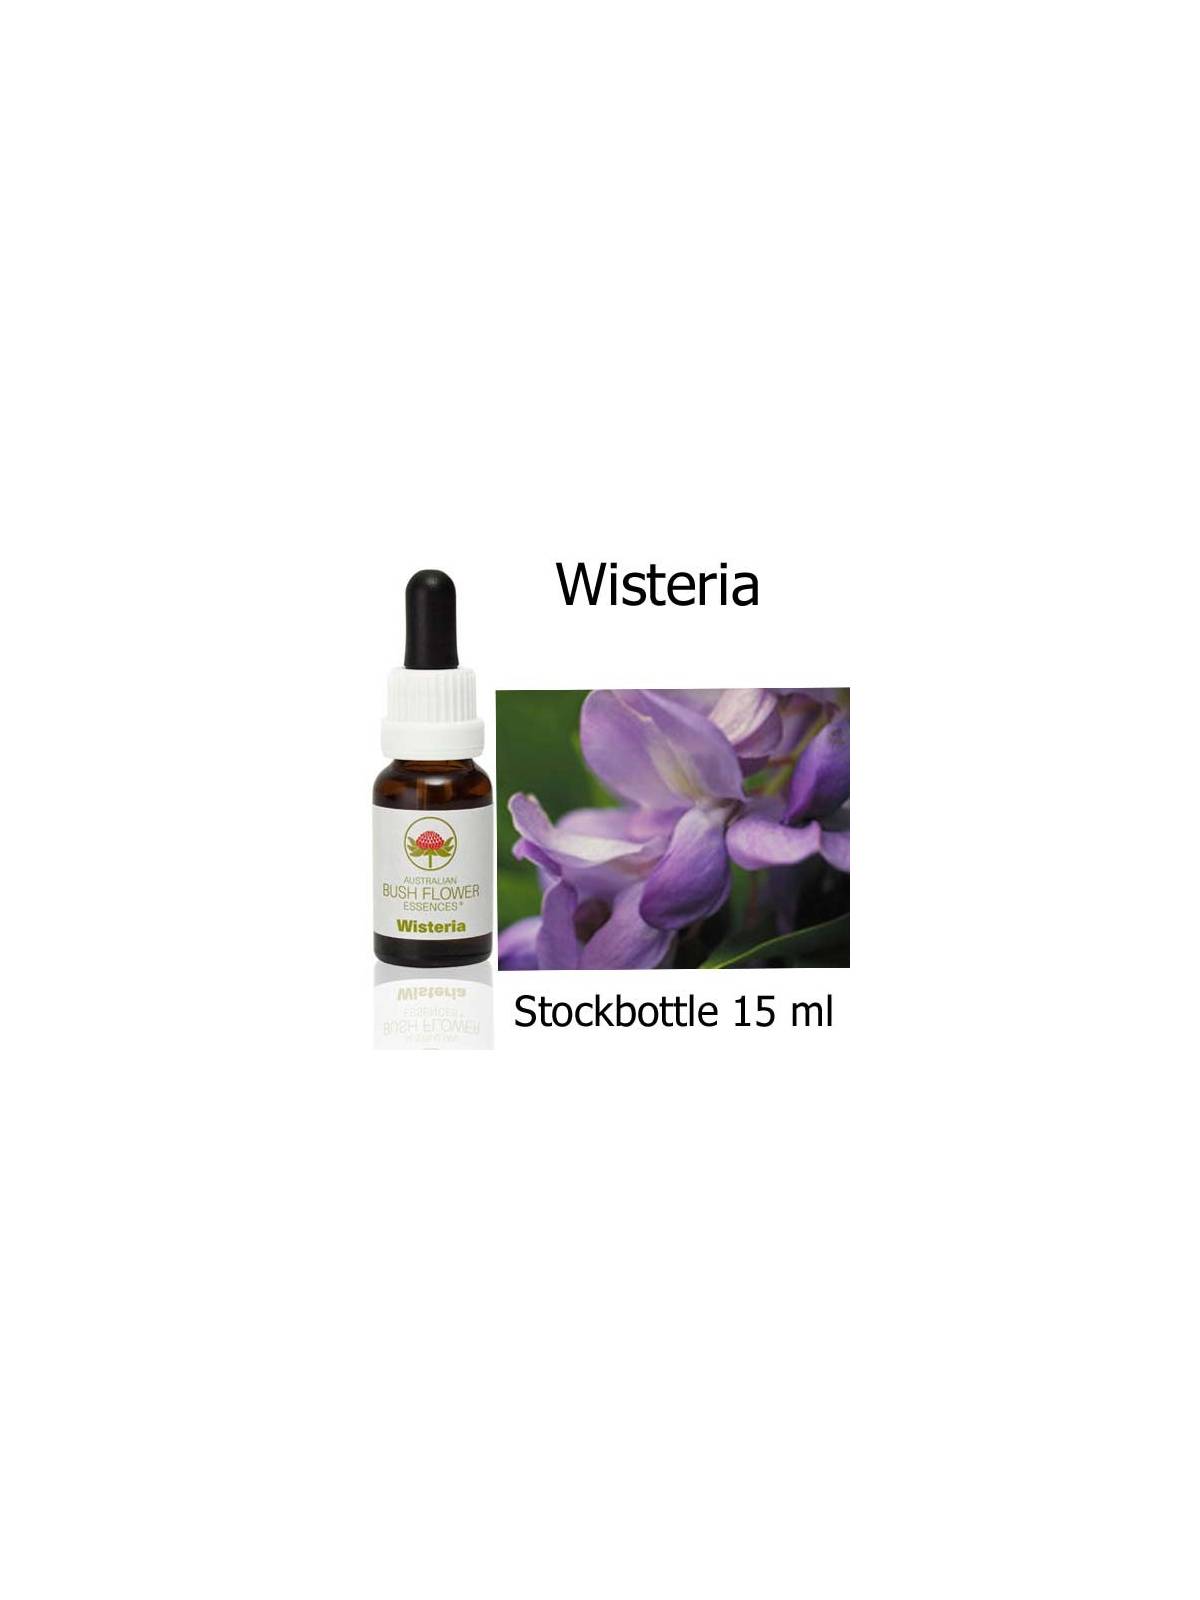 wisteria australian bush flower essences buschblüten stockbottles